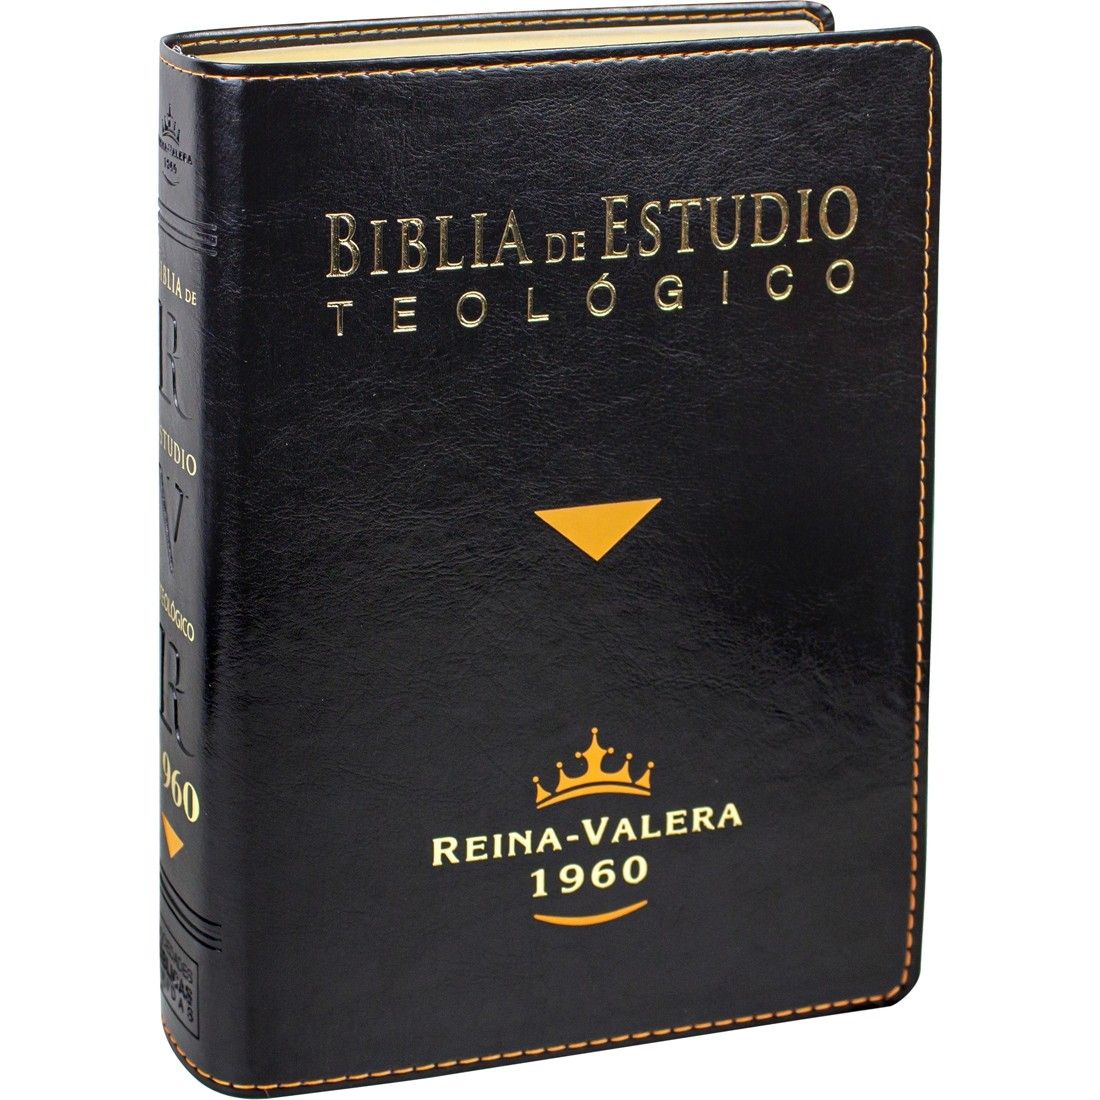 Bíblia De Estudio Teológica | Reina-Valera 1960